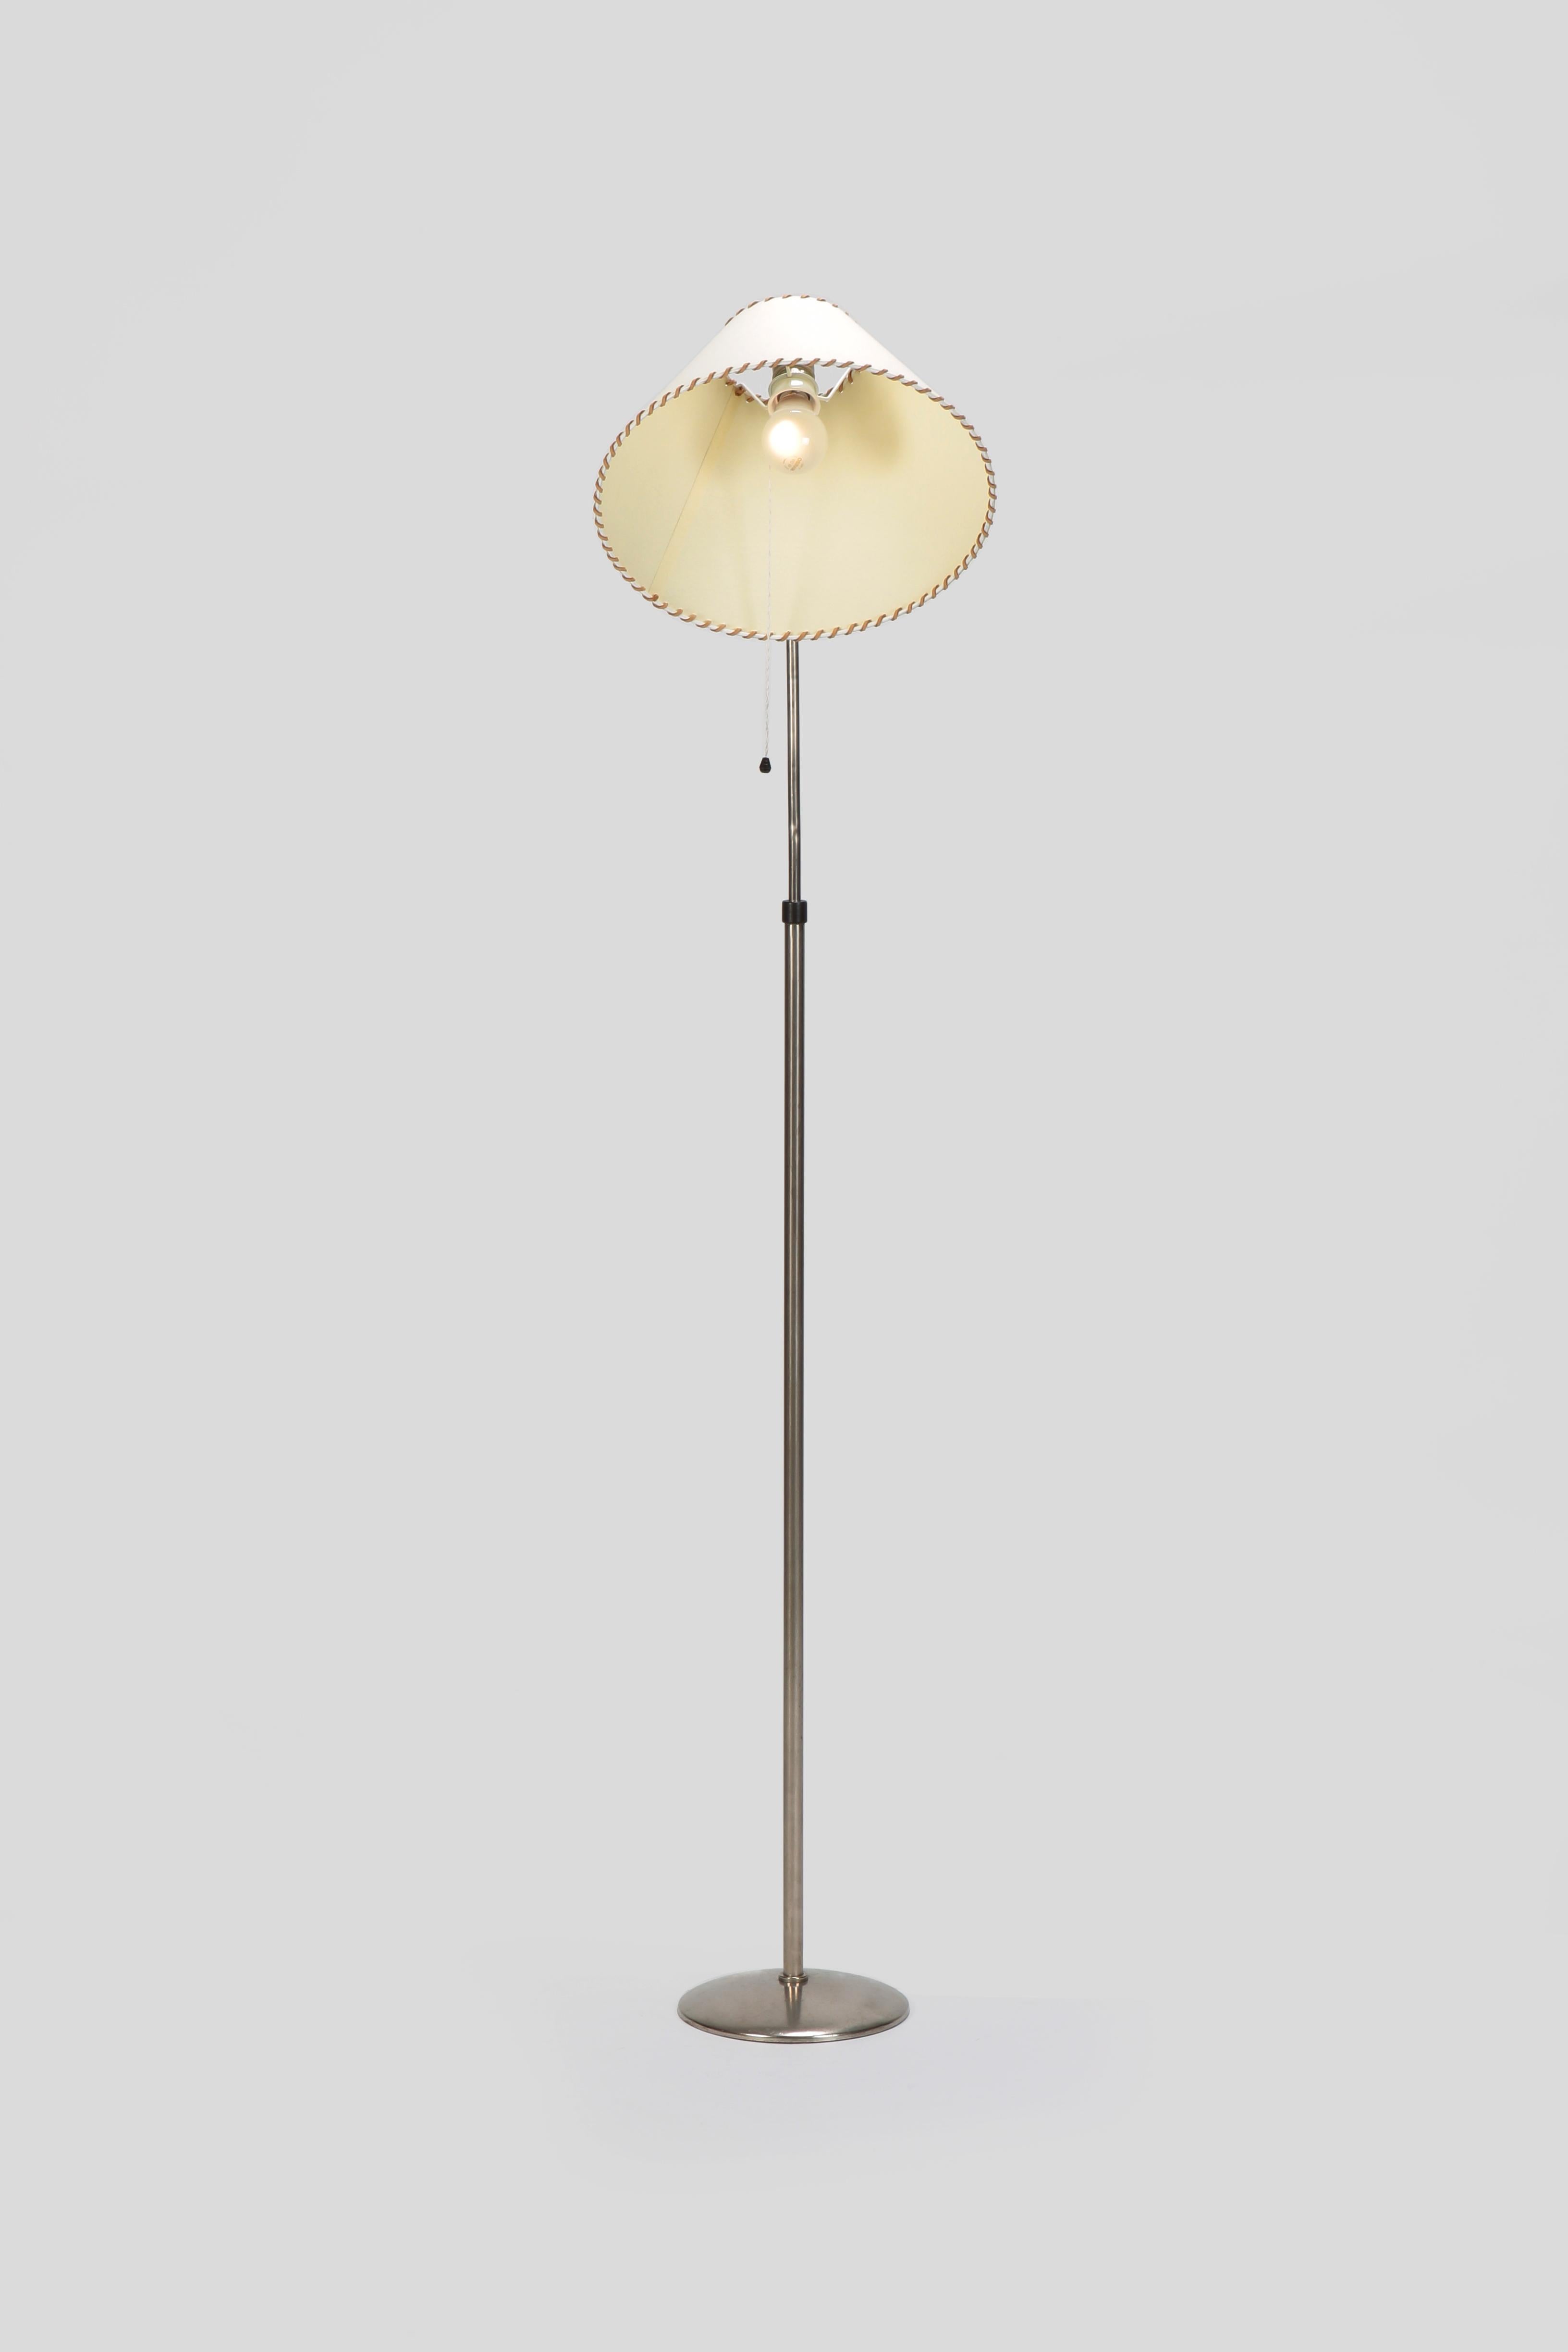 Swiss Sigfried Giedion Floor Lamp BAG Turgi, 1940s For Sale